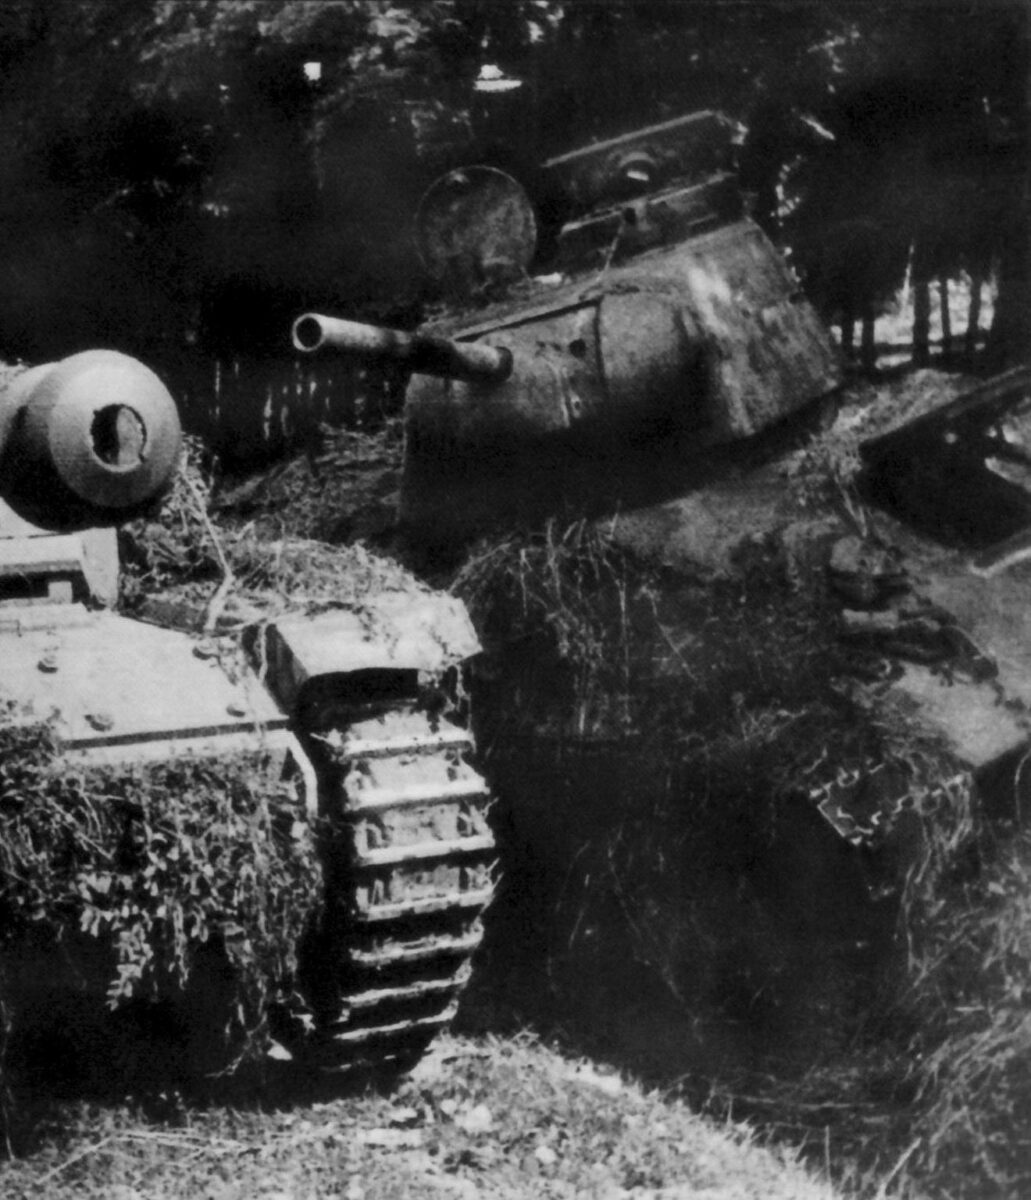 StuG 40 Ausf. G